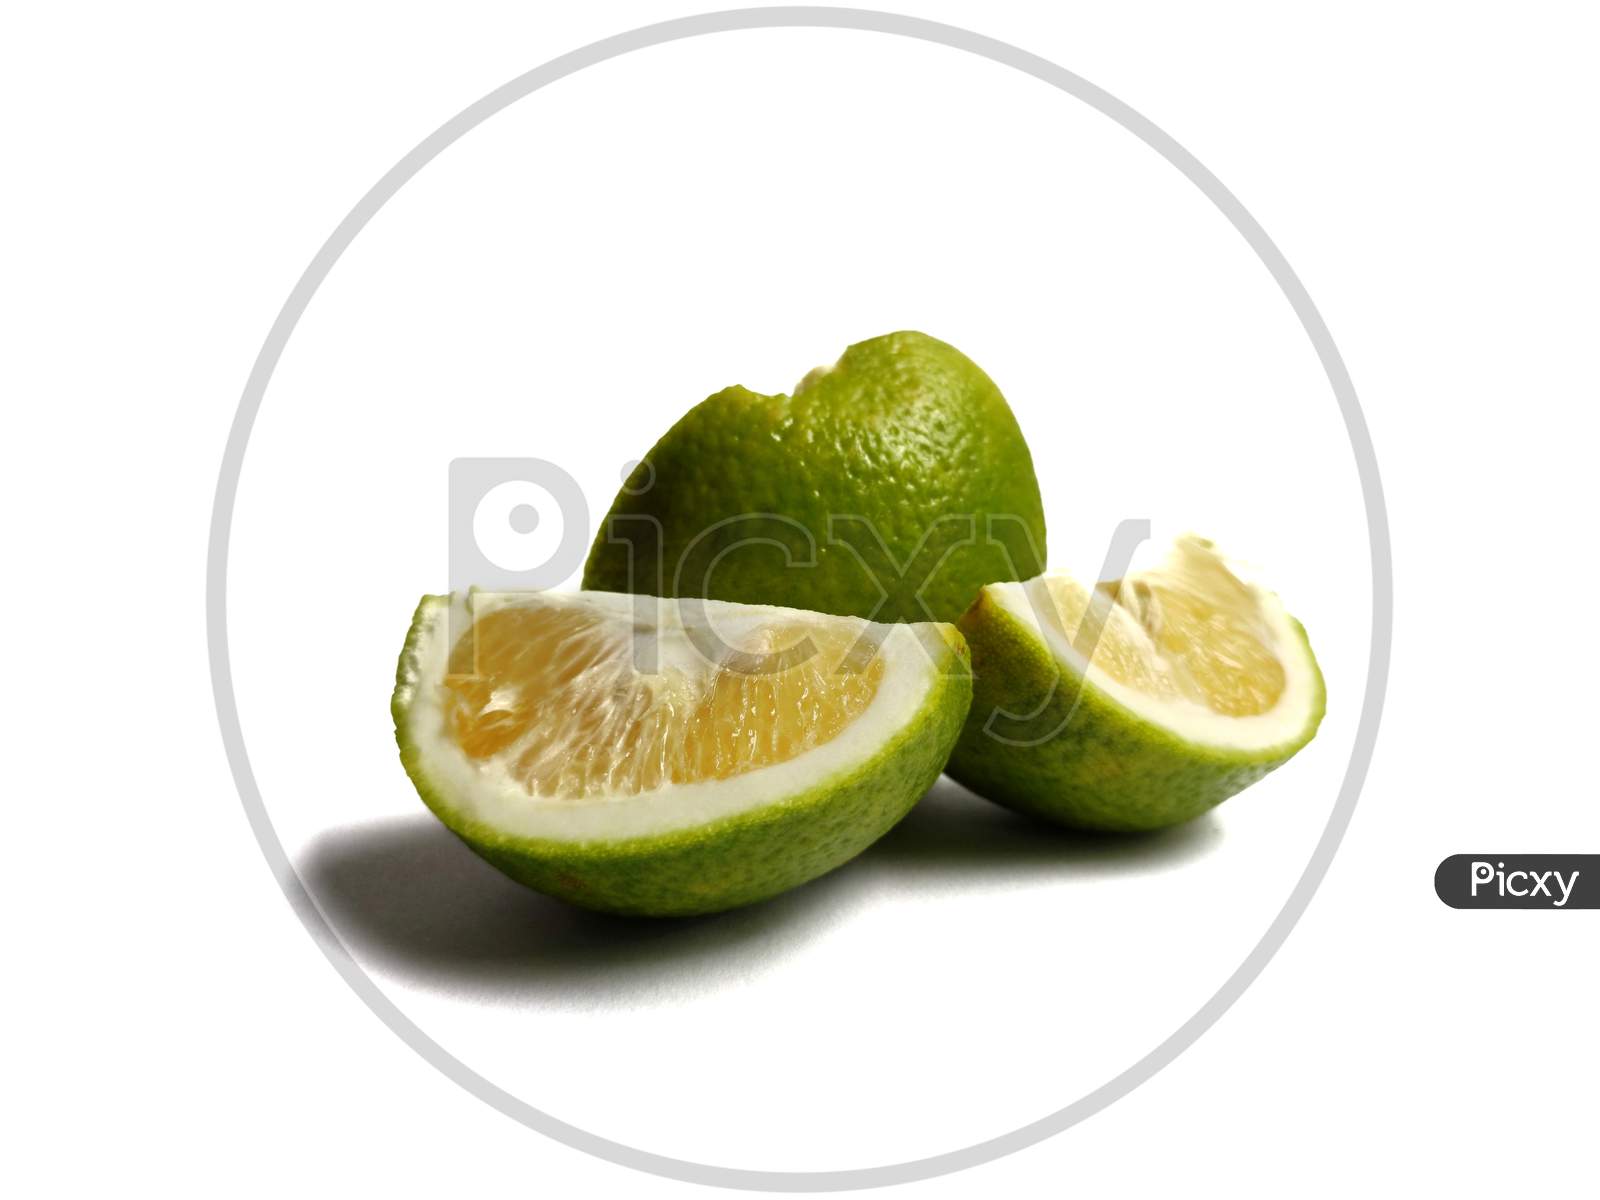 limon,mousambi, musambi, sweet lime, sweet lemon, and sweet limetta on light background